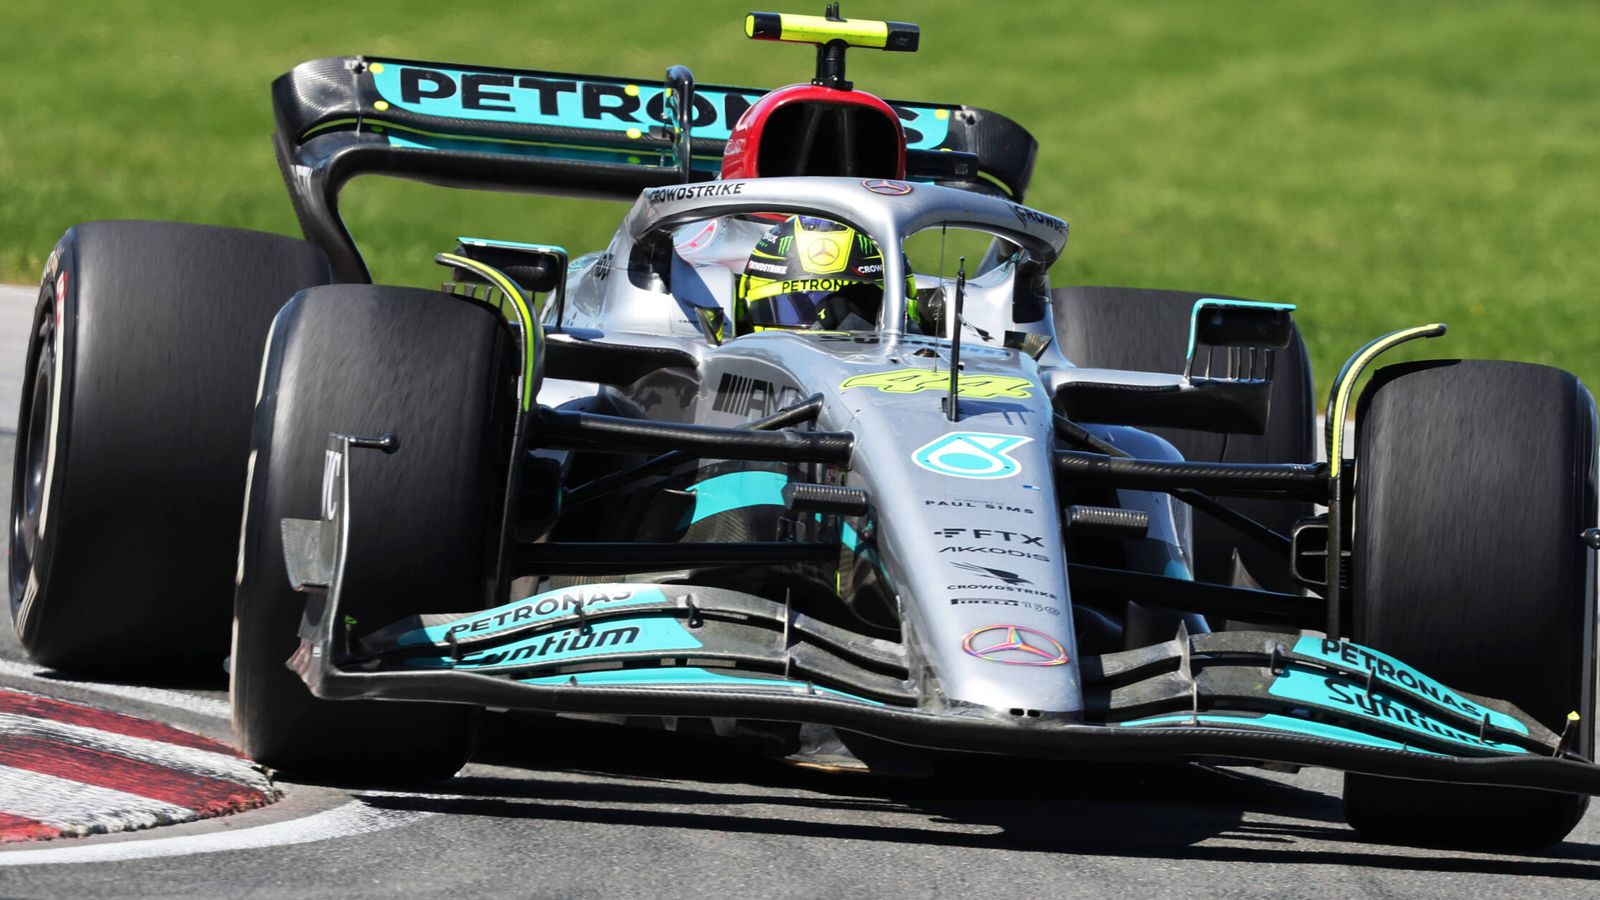 Mercedes plan British GP upgrades but Nico Rosberg predicts team 'still miles away' from Red Bull, Ferrari